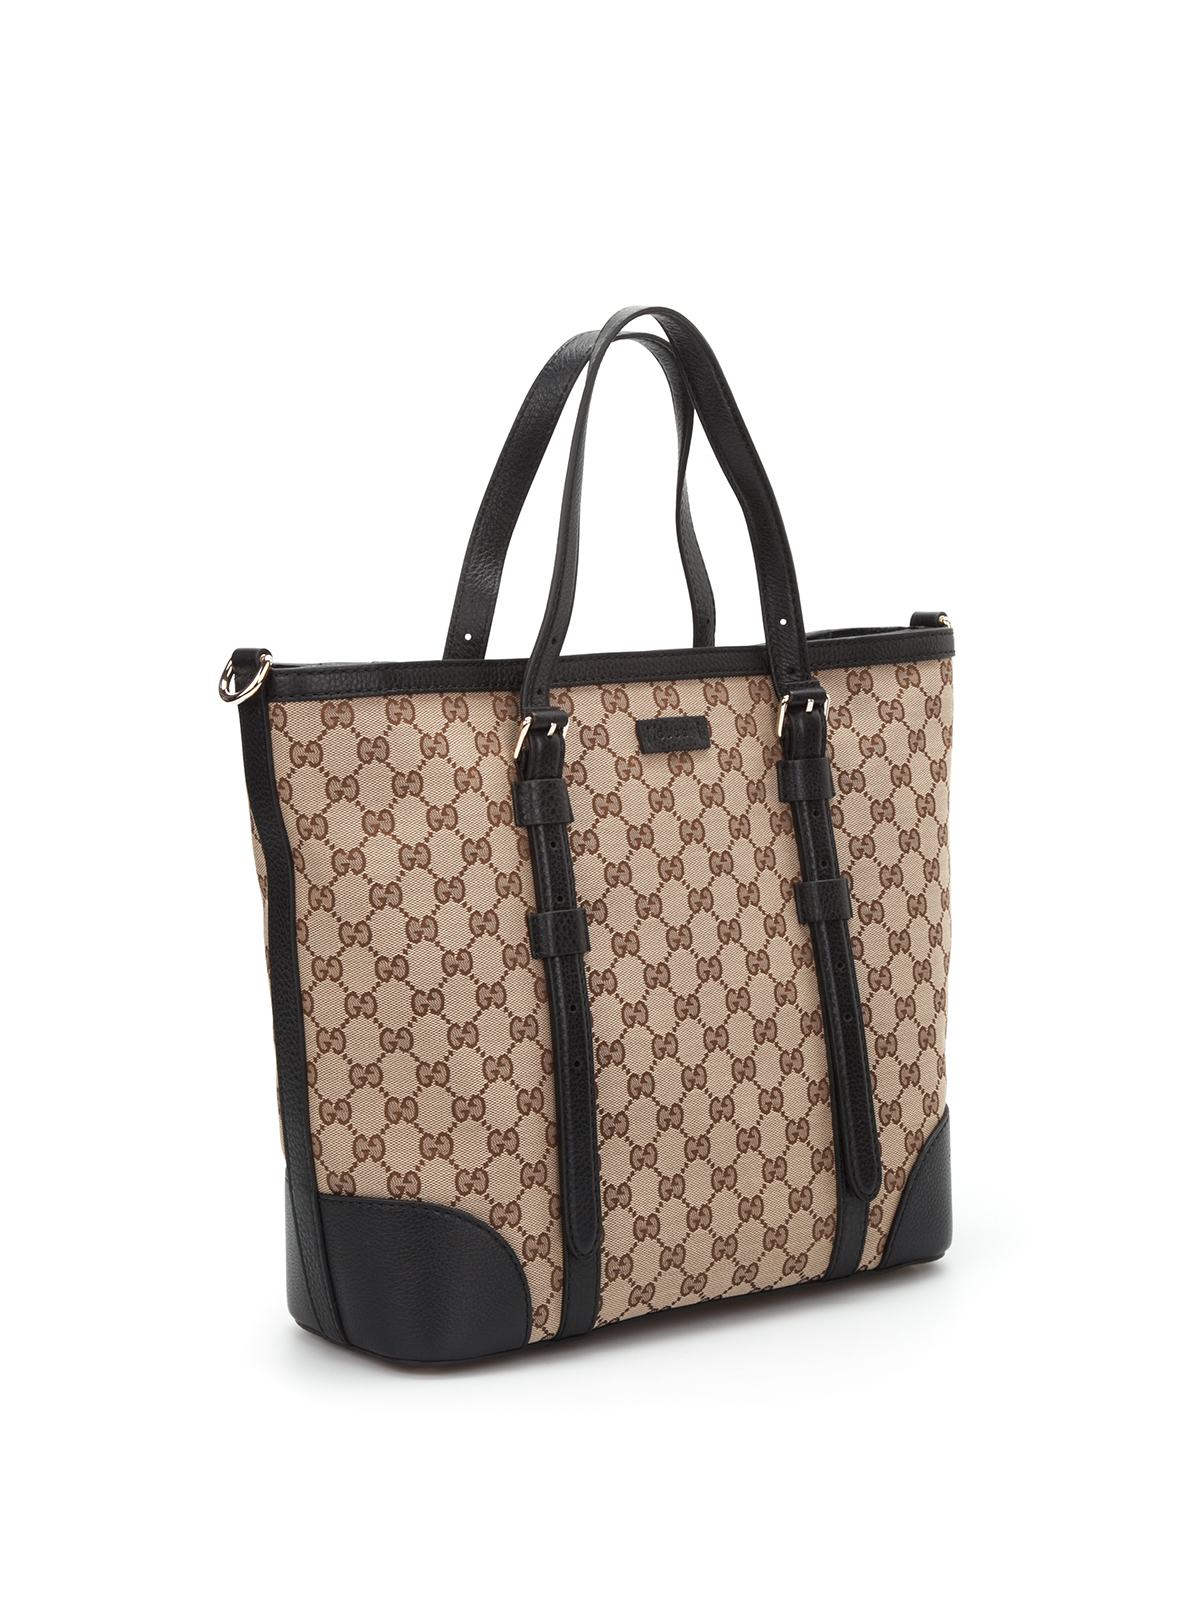 Gucci - GG classic tote - totes bags 